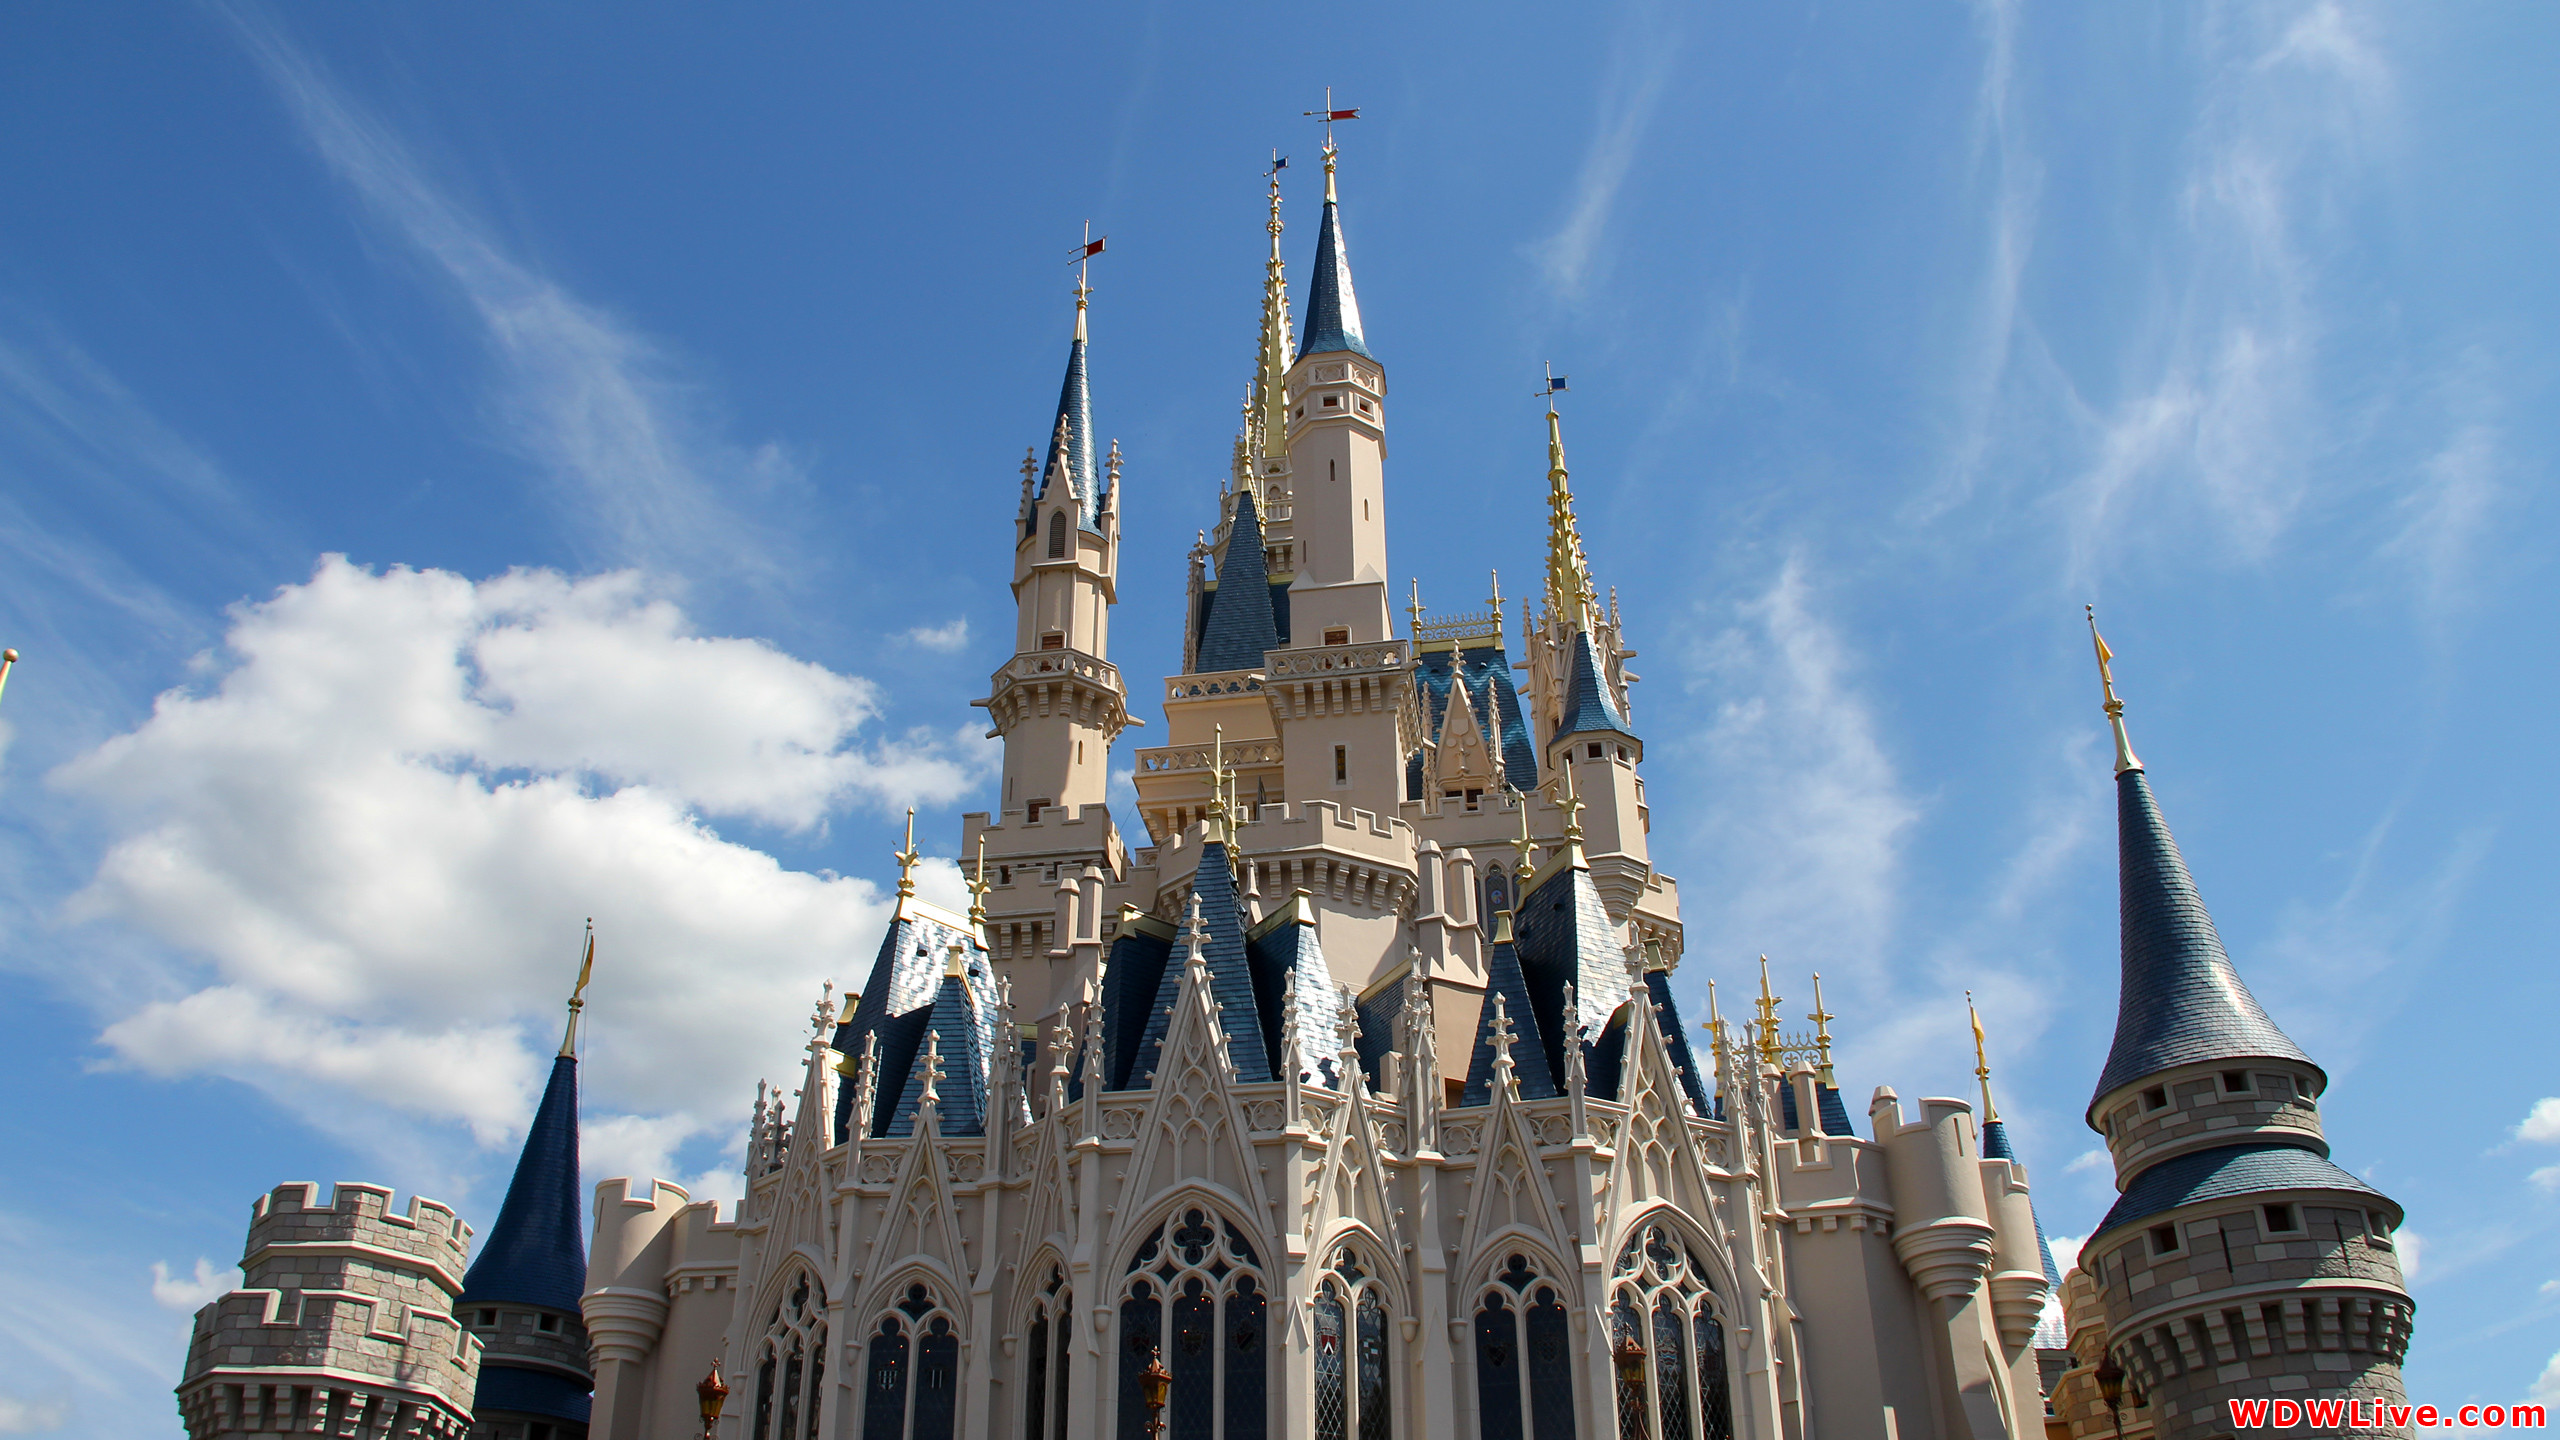 2560x1440 Download wallpaper Beautiful Cinderella Castle: Full ...